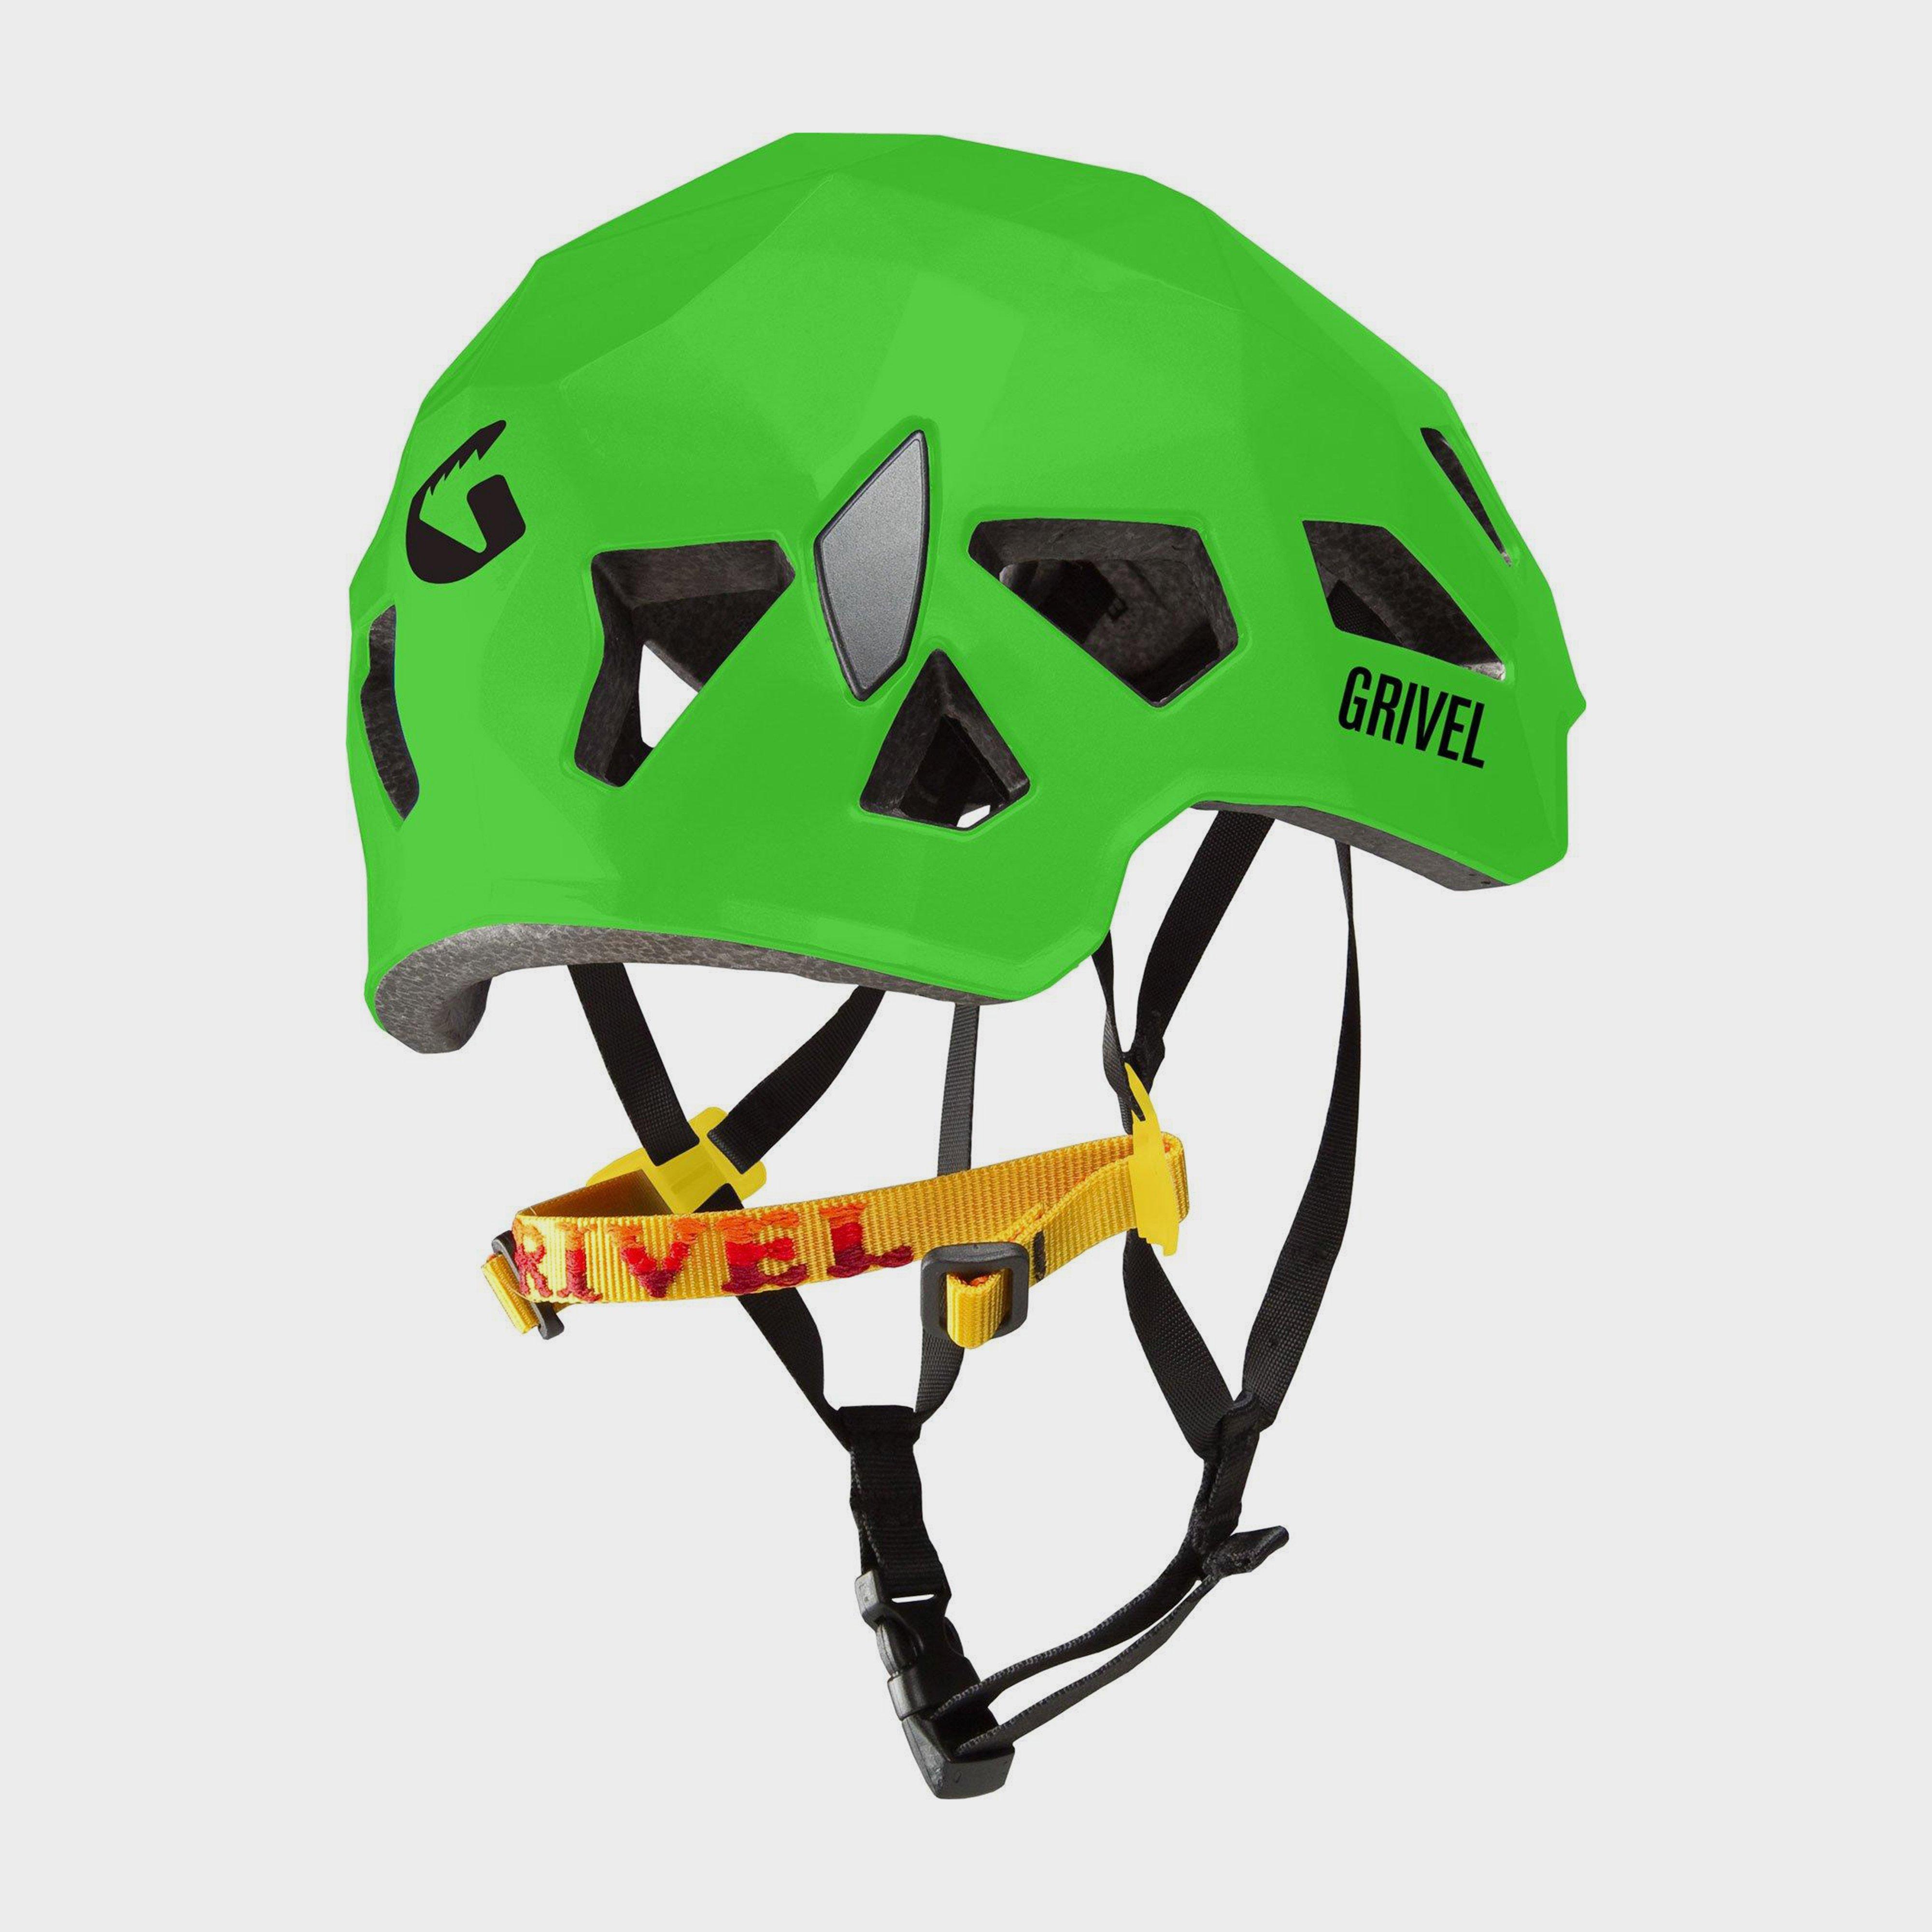 Grivel Stealth Hard Shell Climbing Helmet Review